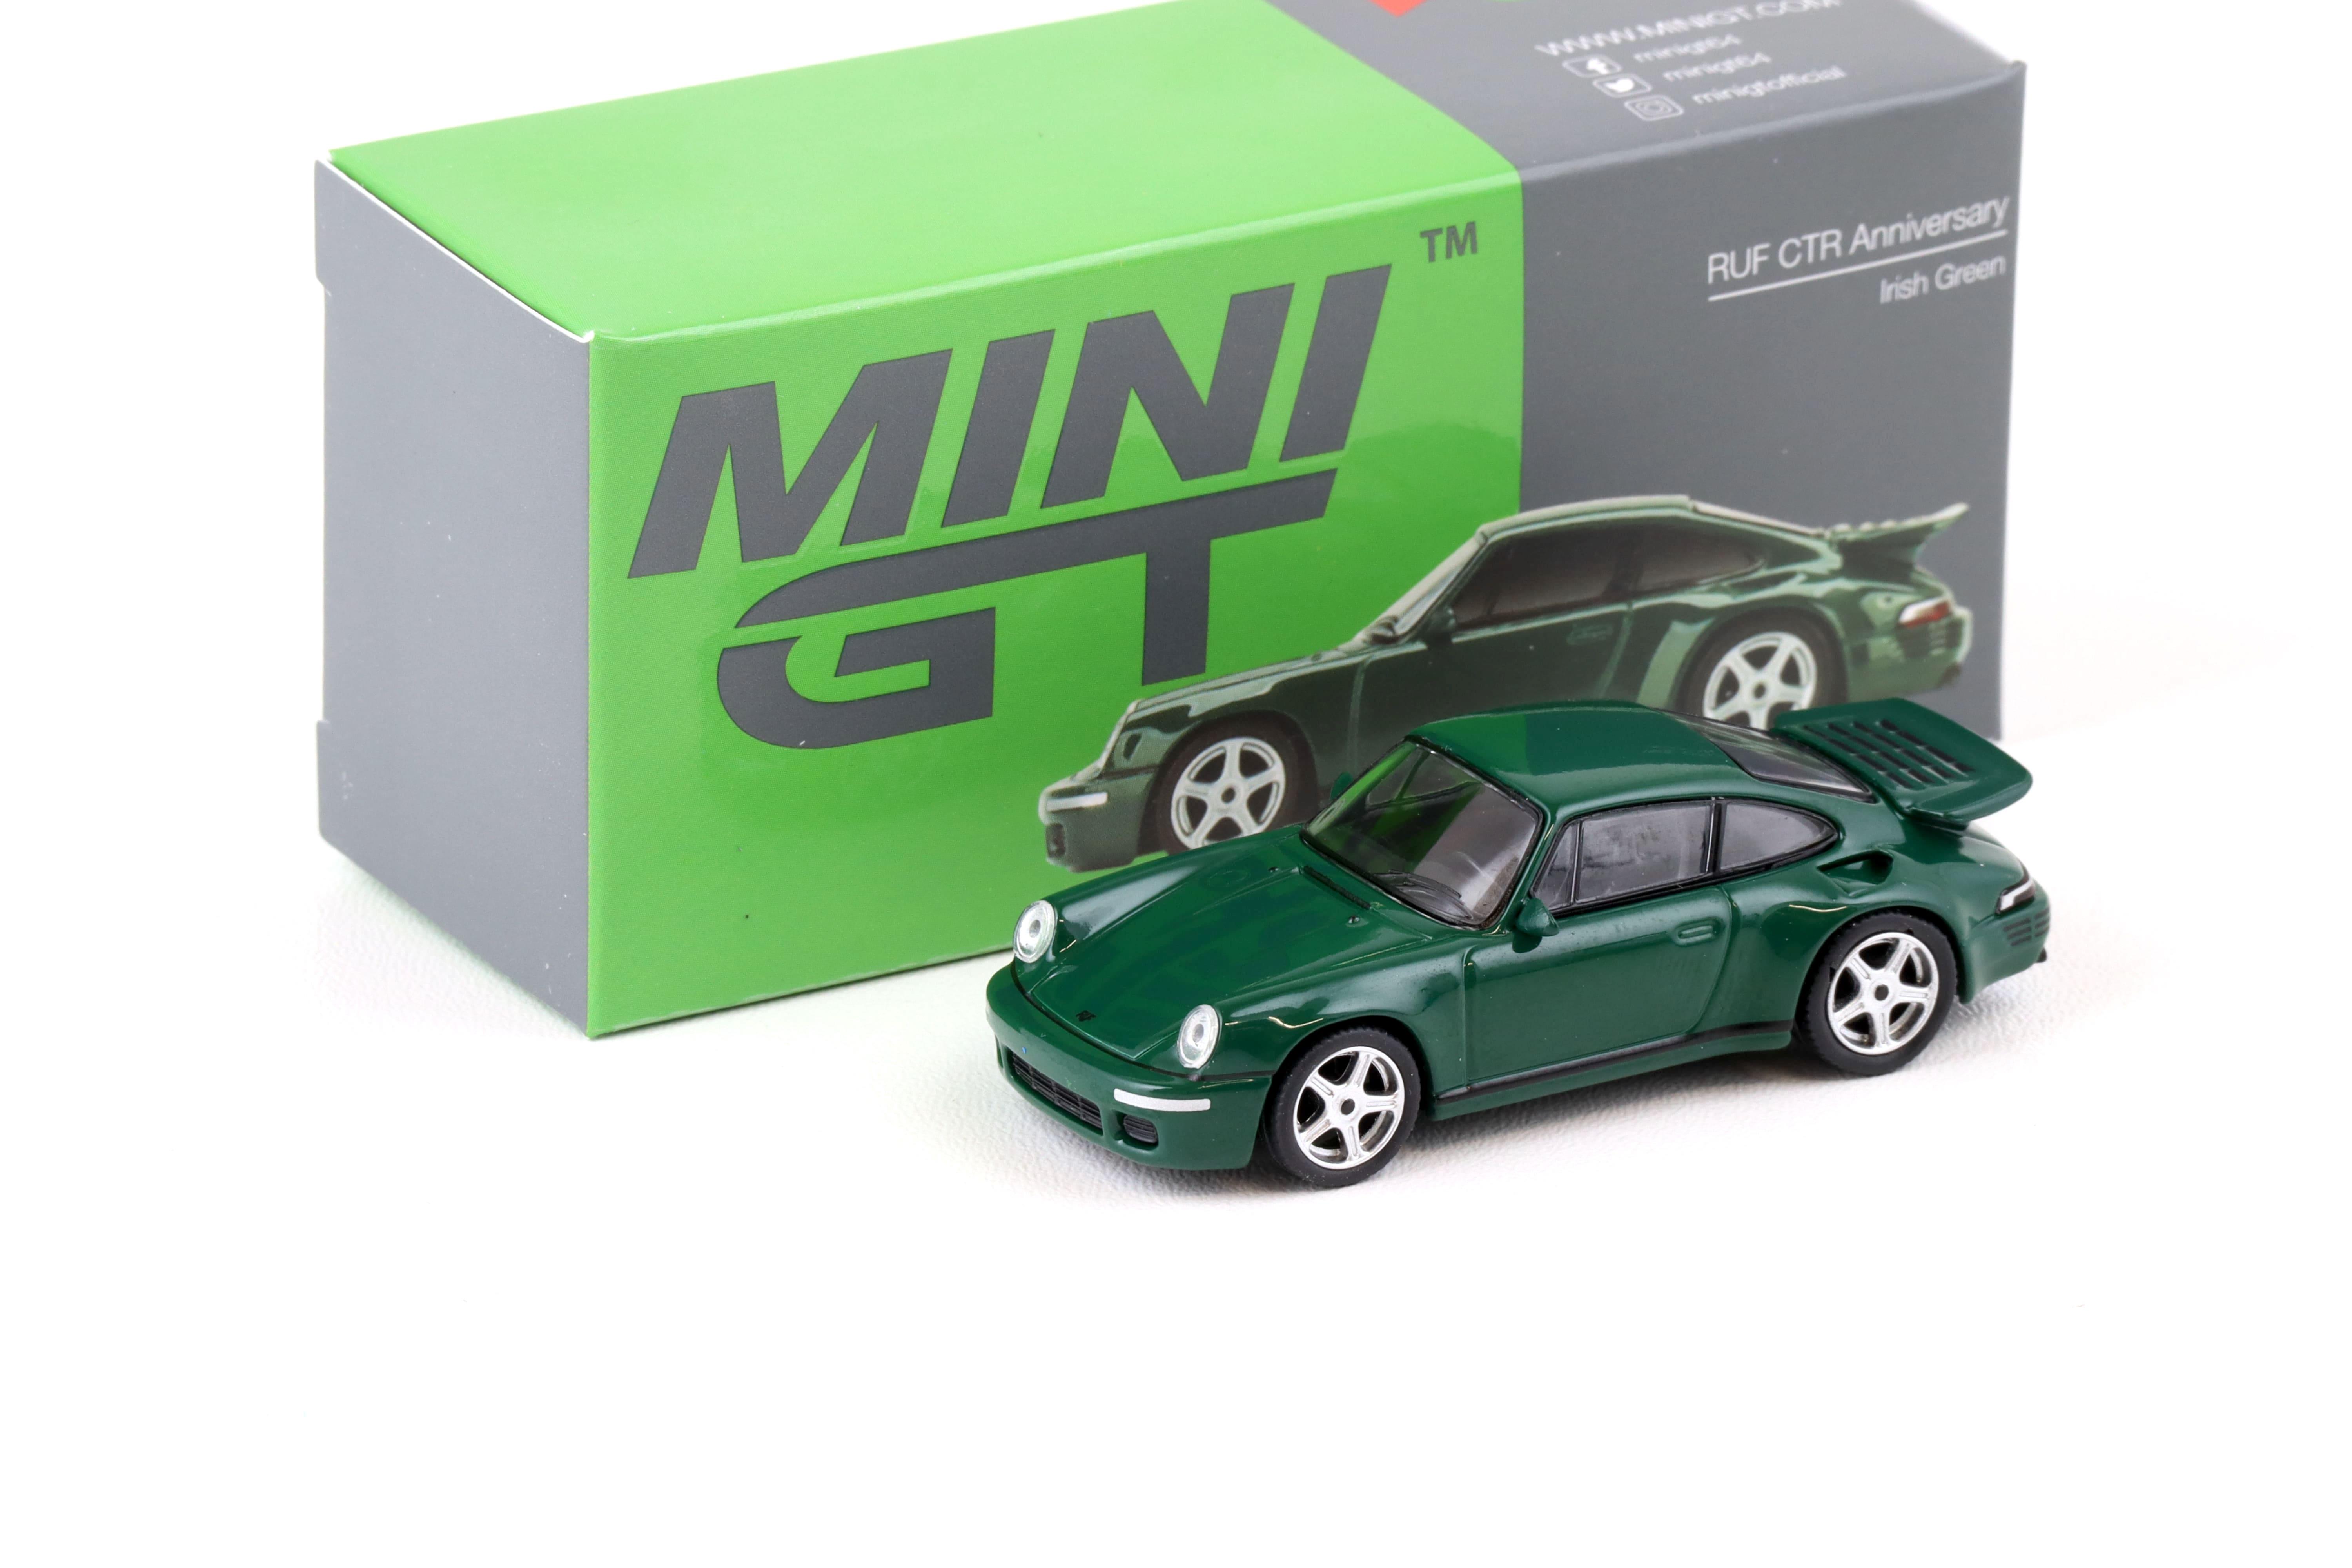 1:64 TSM Mini GT Porsche 911 RUF CTR Anniversary Irish green